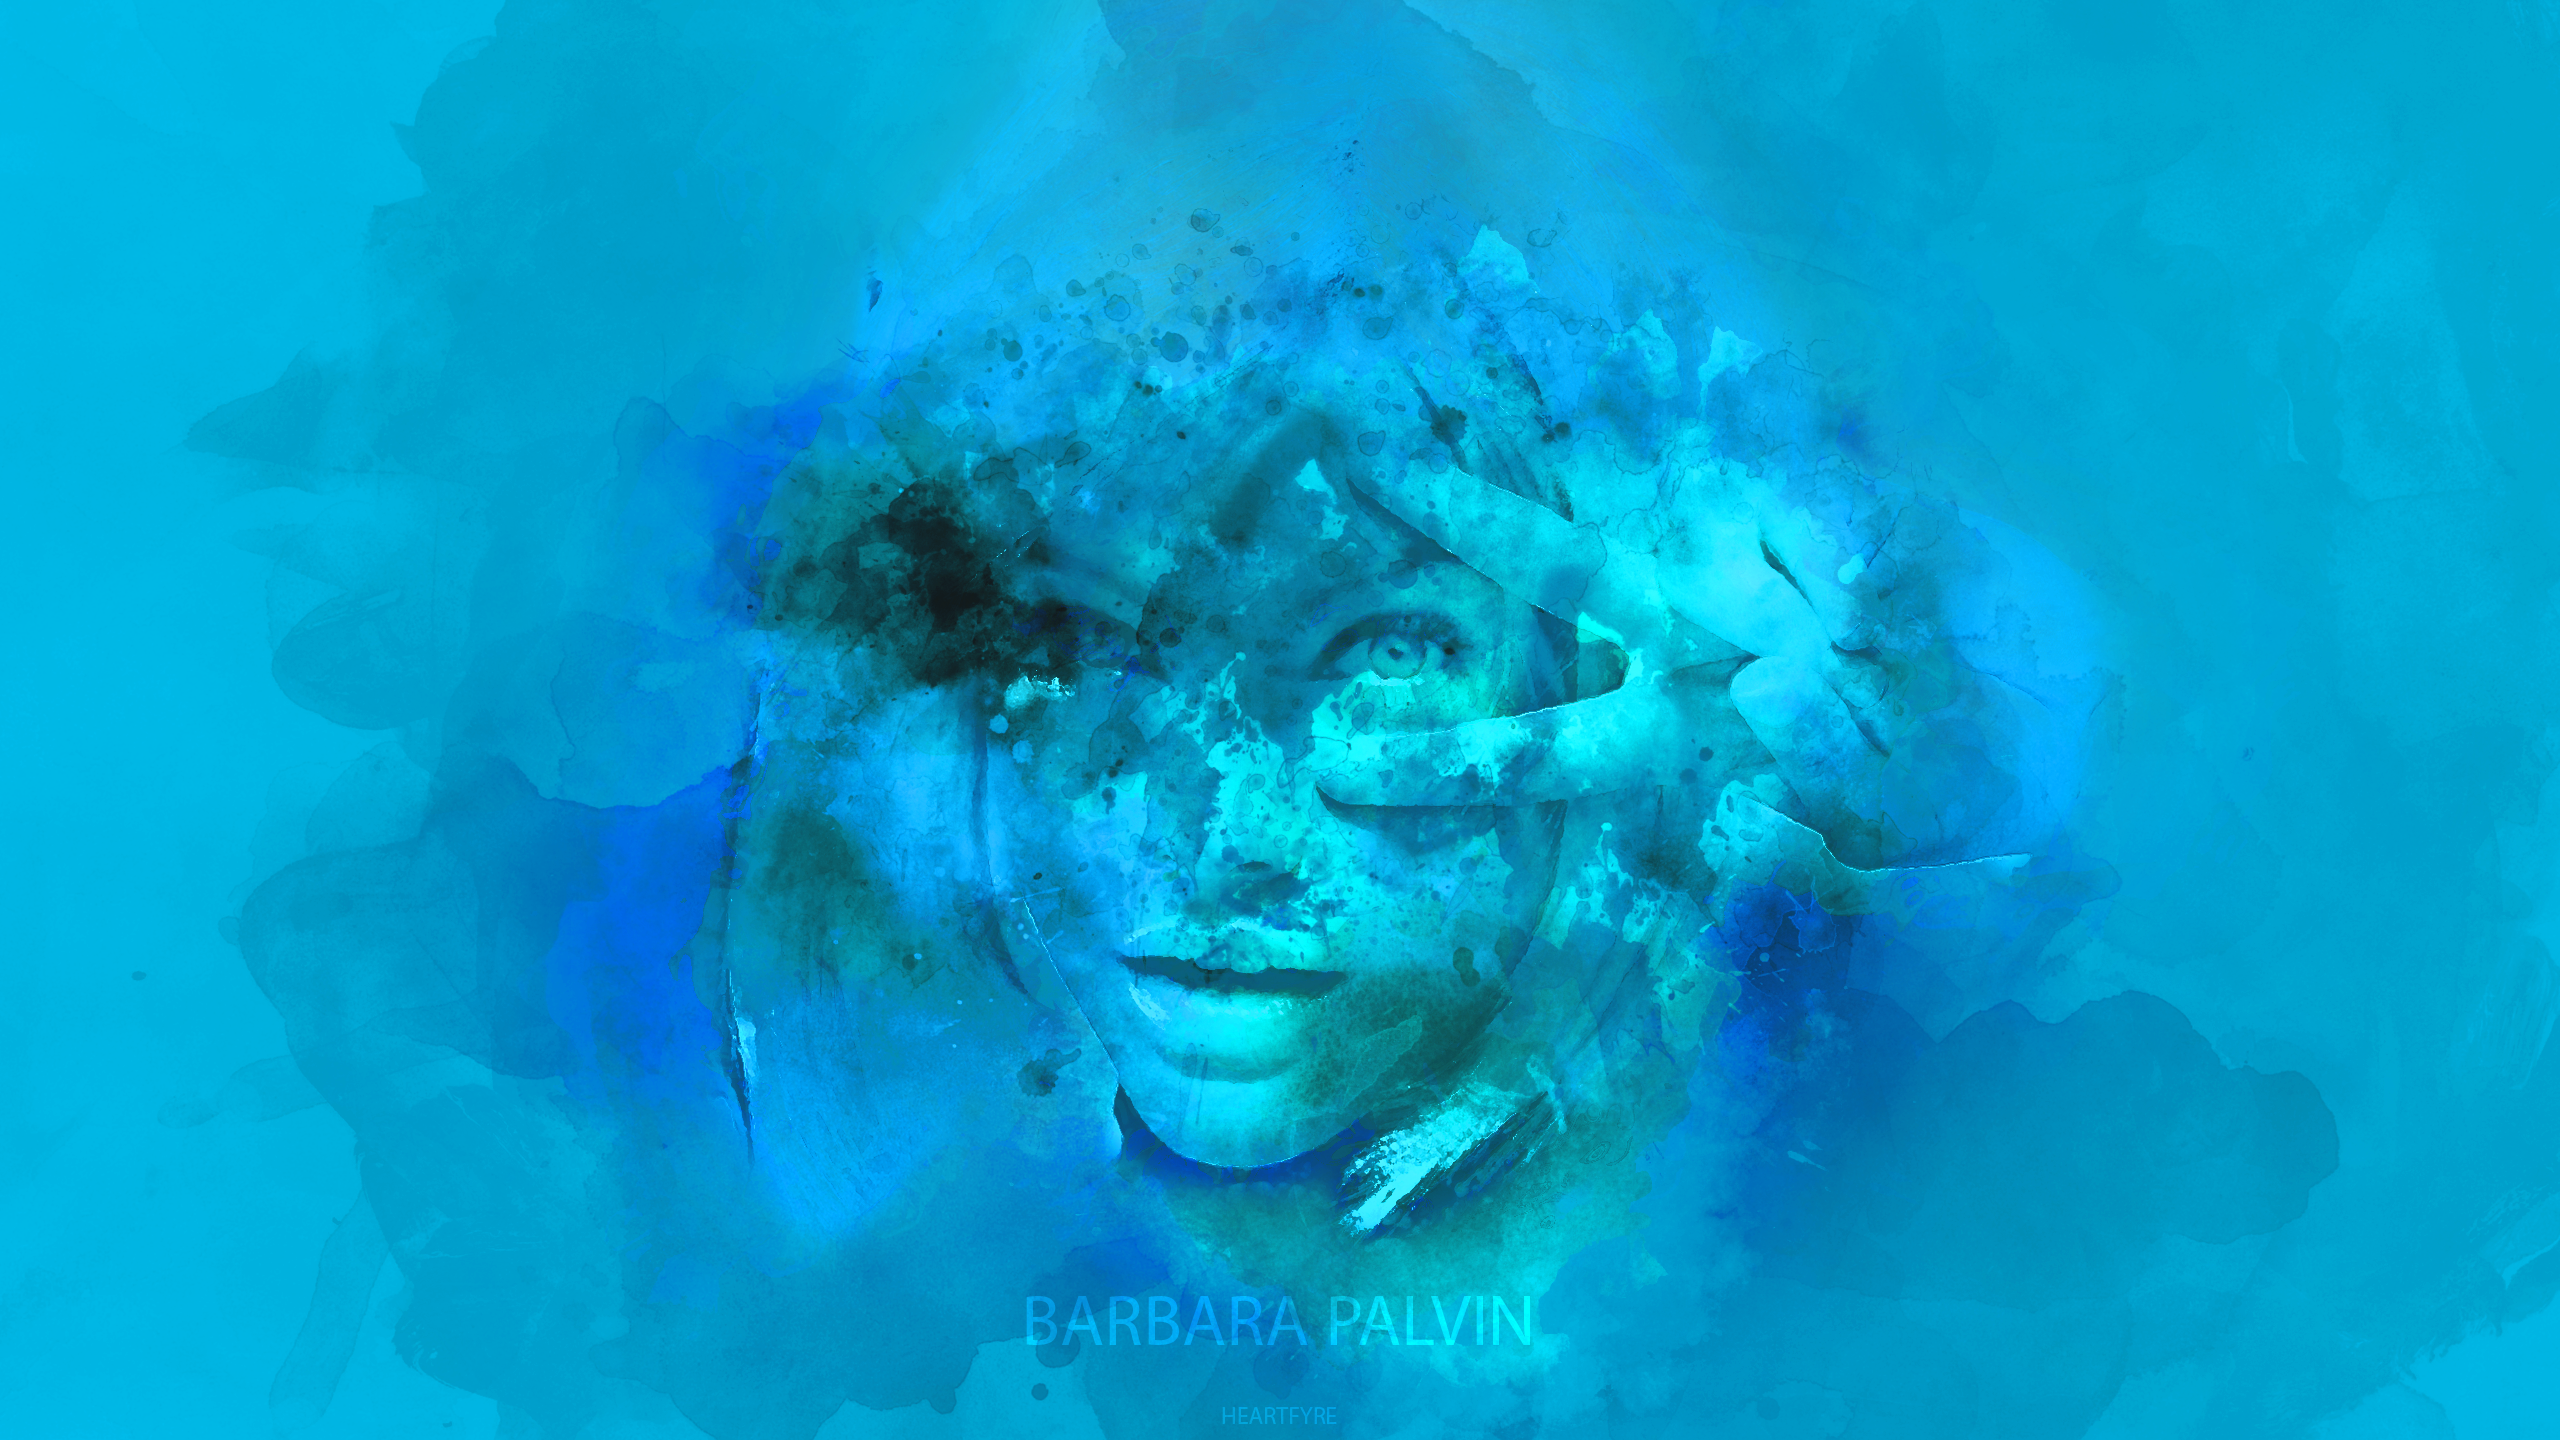 People 2560x1440 portrait watercolor blue blue background Barbara Palvin cyan turquoise women digital art watermarked